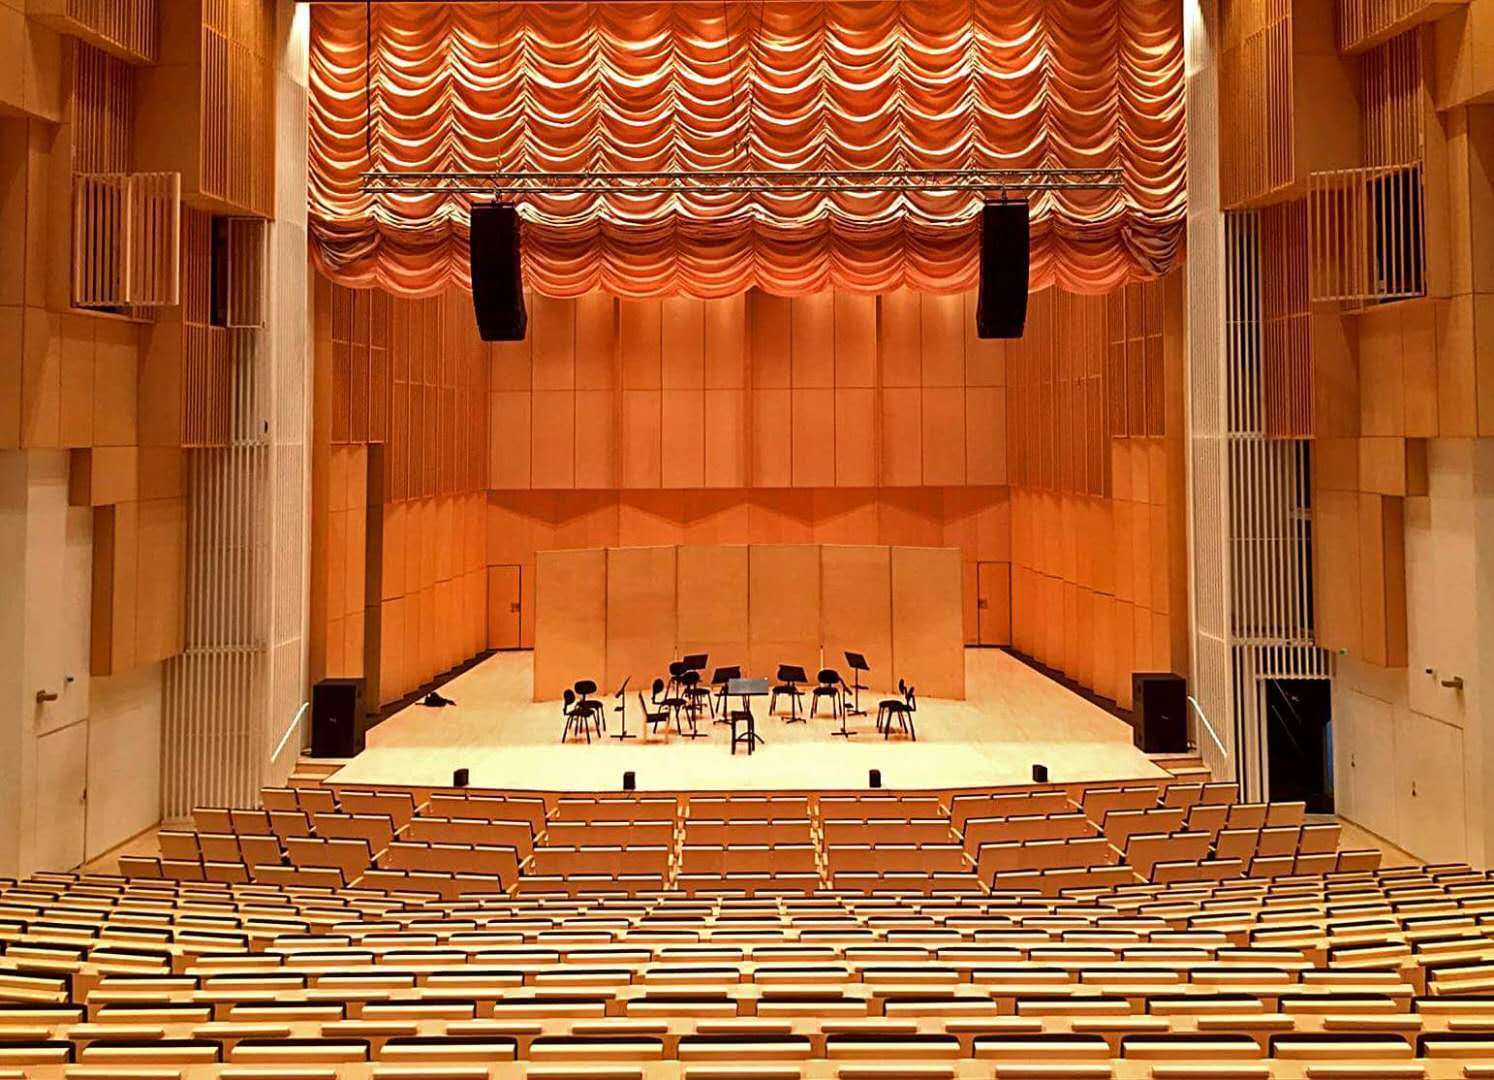 Finnish Martti Concert Hall chooses Aura audio sound system